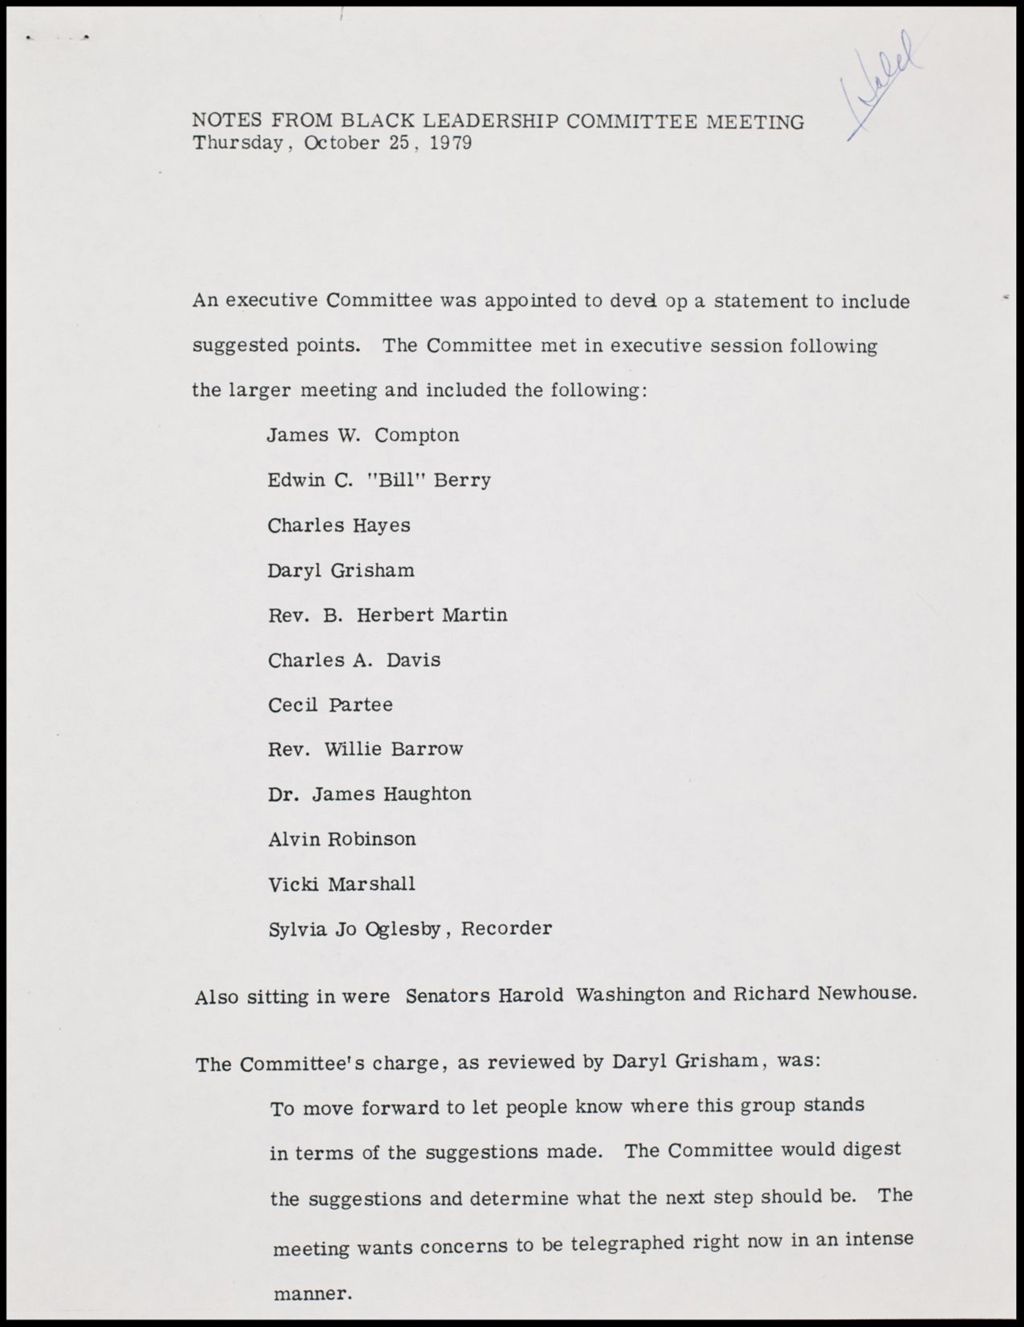 Miniature of Black Leadership Committee meeting notes, 1979 (Folder I-3189)